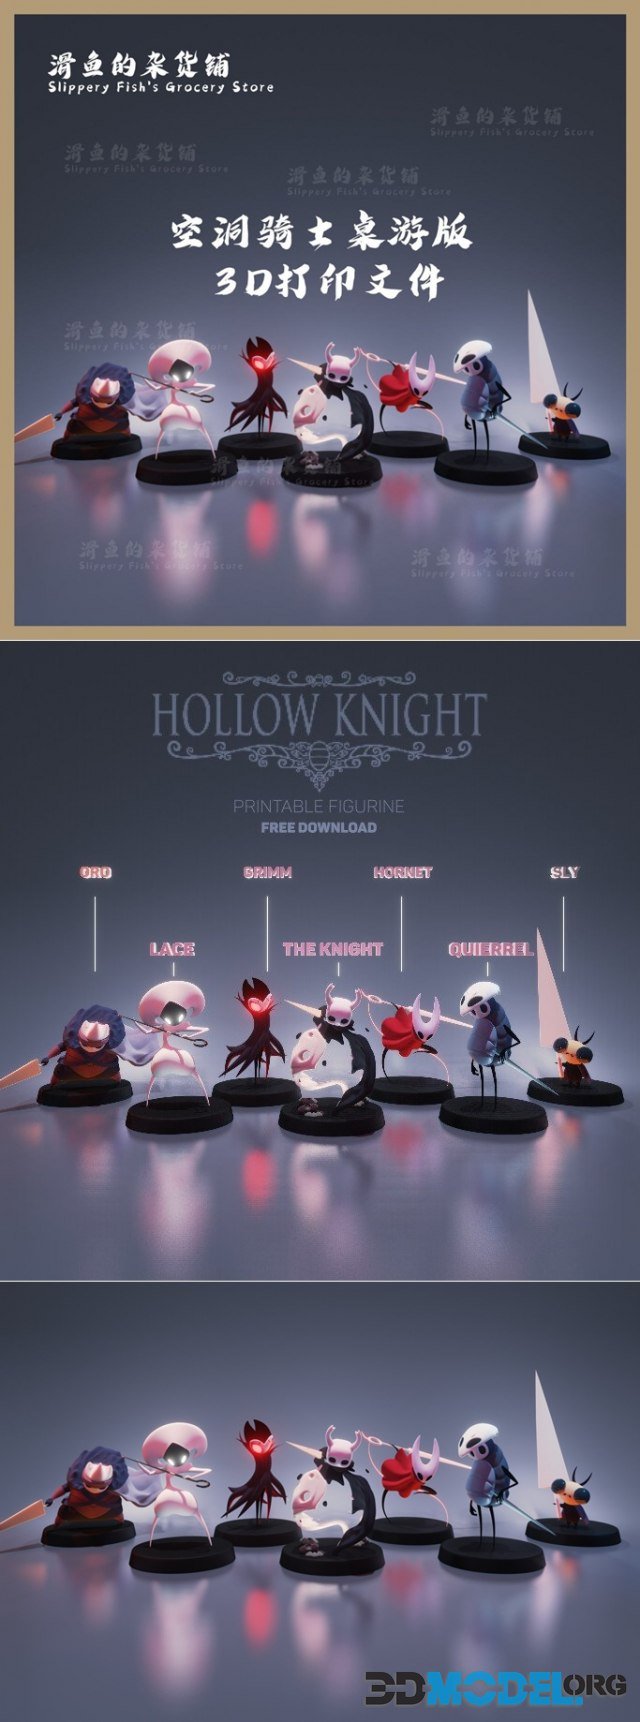 Hollow knight – Printable